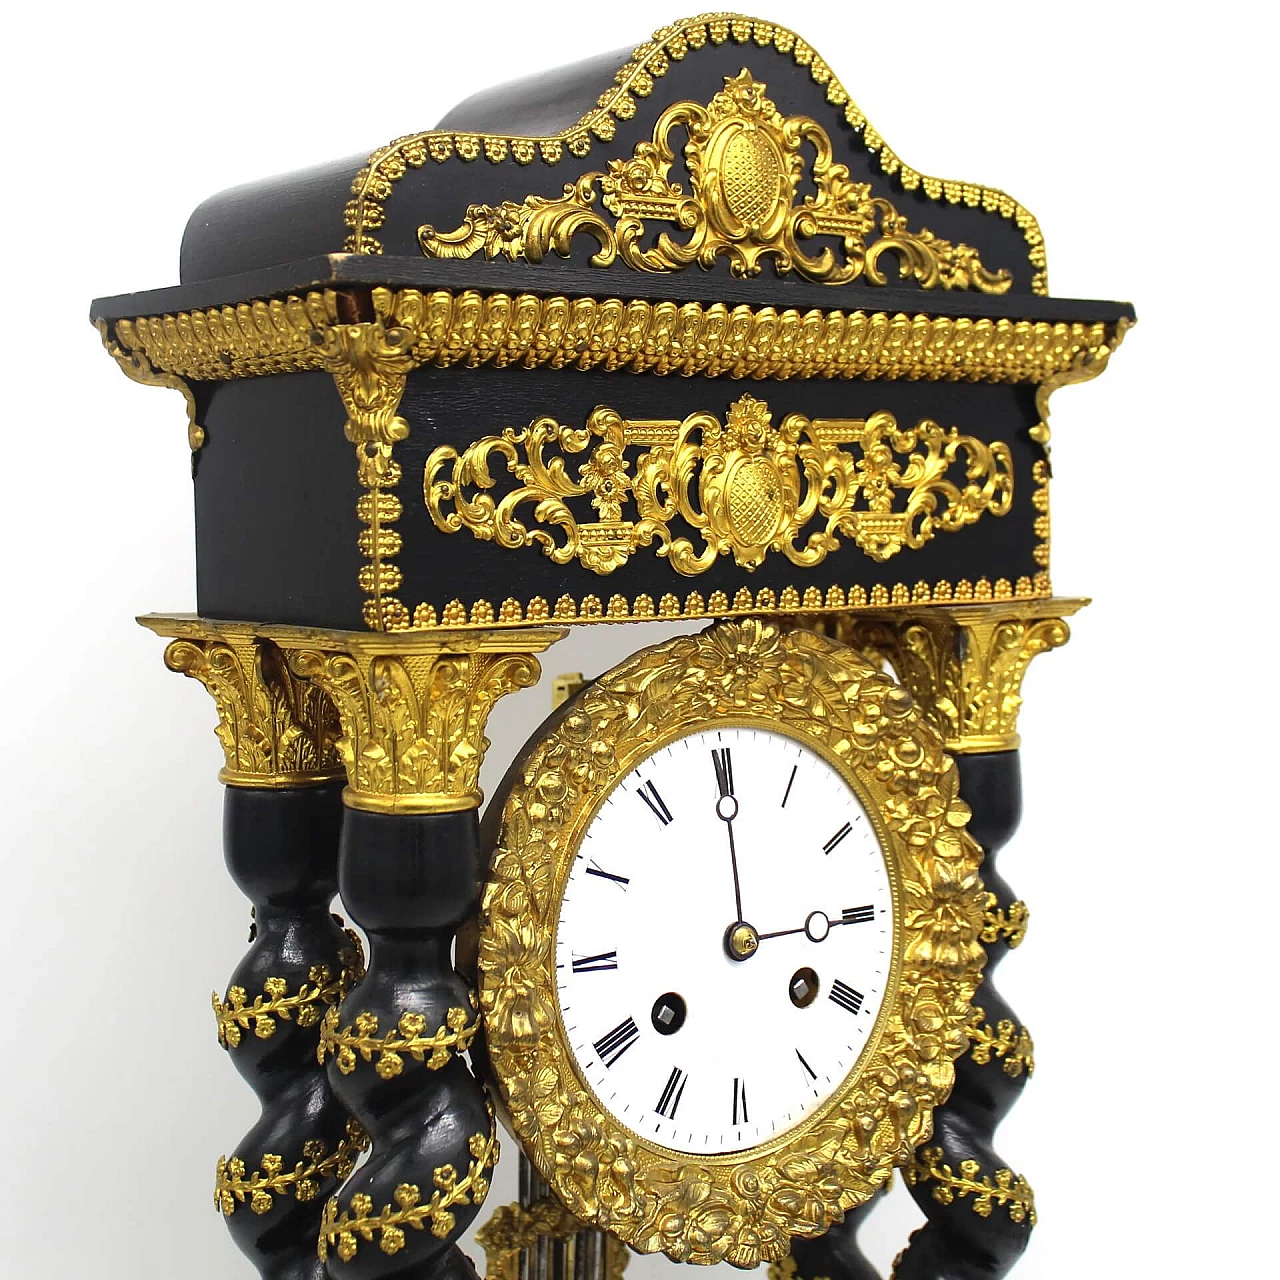 Napoleon III pendulum clock in ebonized wood and gilded bronzes, 19th century. 1336770